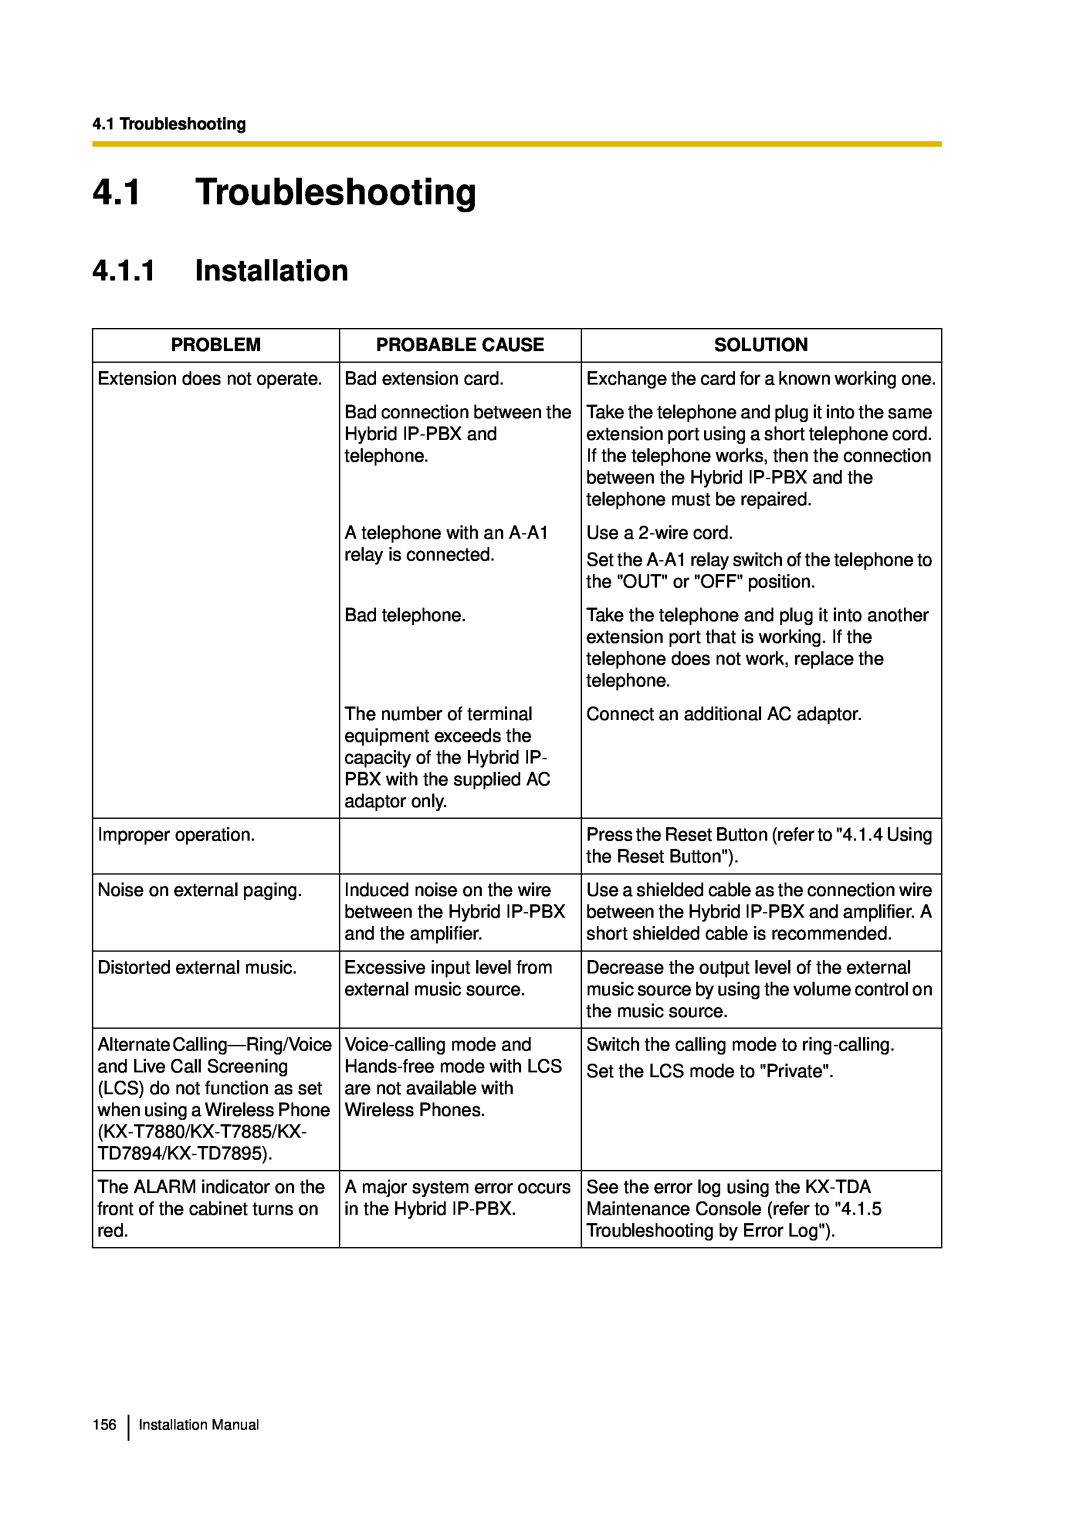 Panasonic KX-TDA30 installation manual 4.1Troubleshooting, 4.1.1Installation, Problem, Probable Cause, Solution 